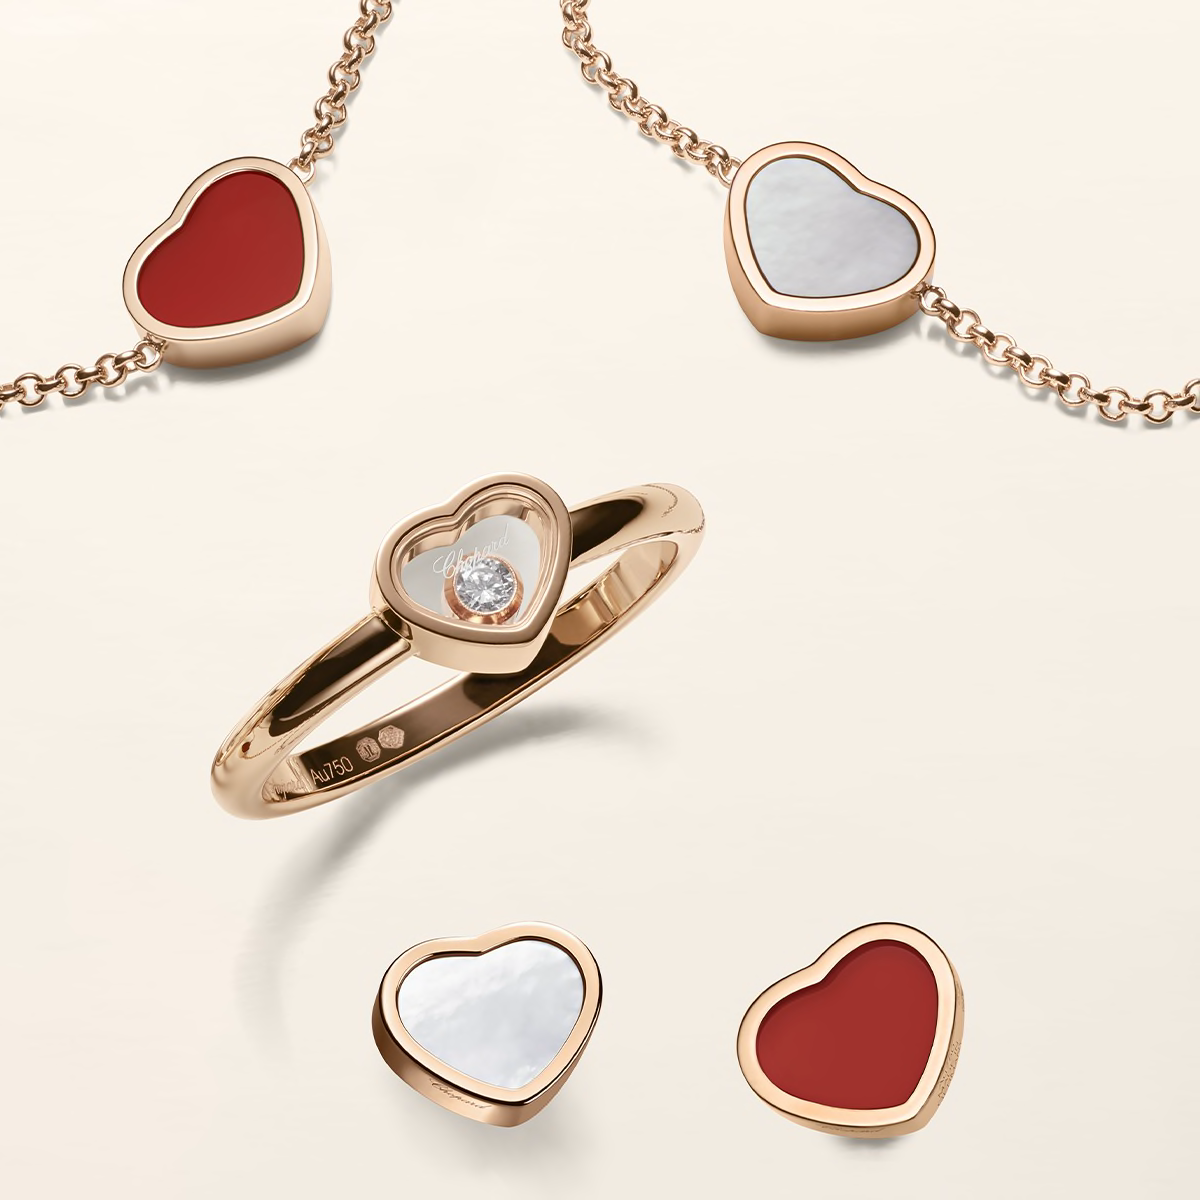 Happy Hearts Luxury Jewelry for Women